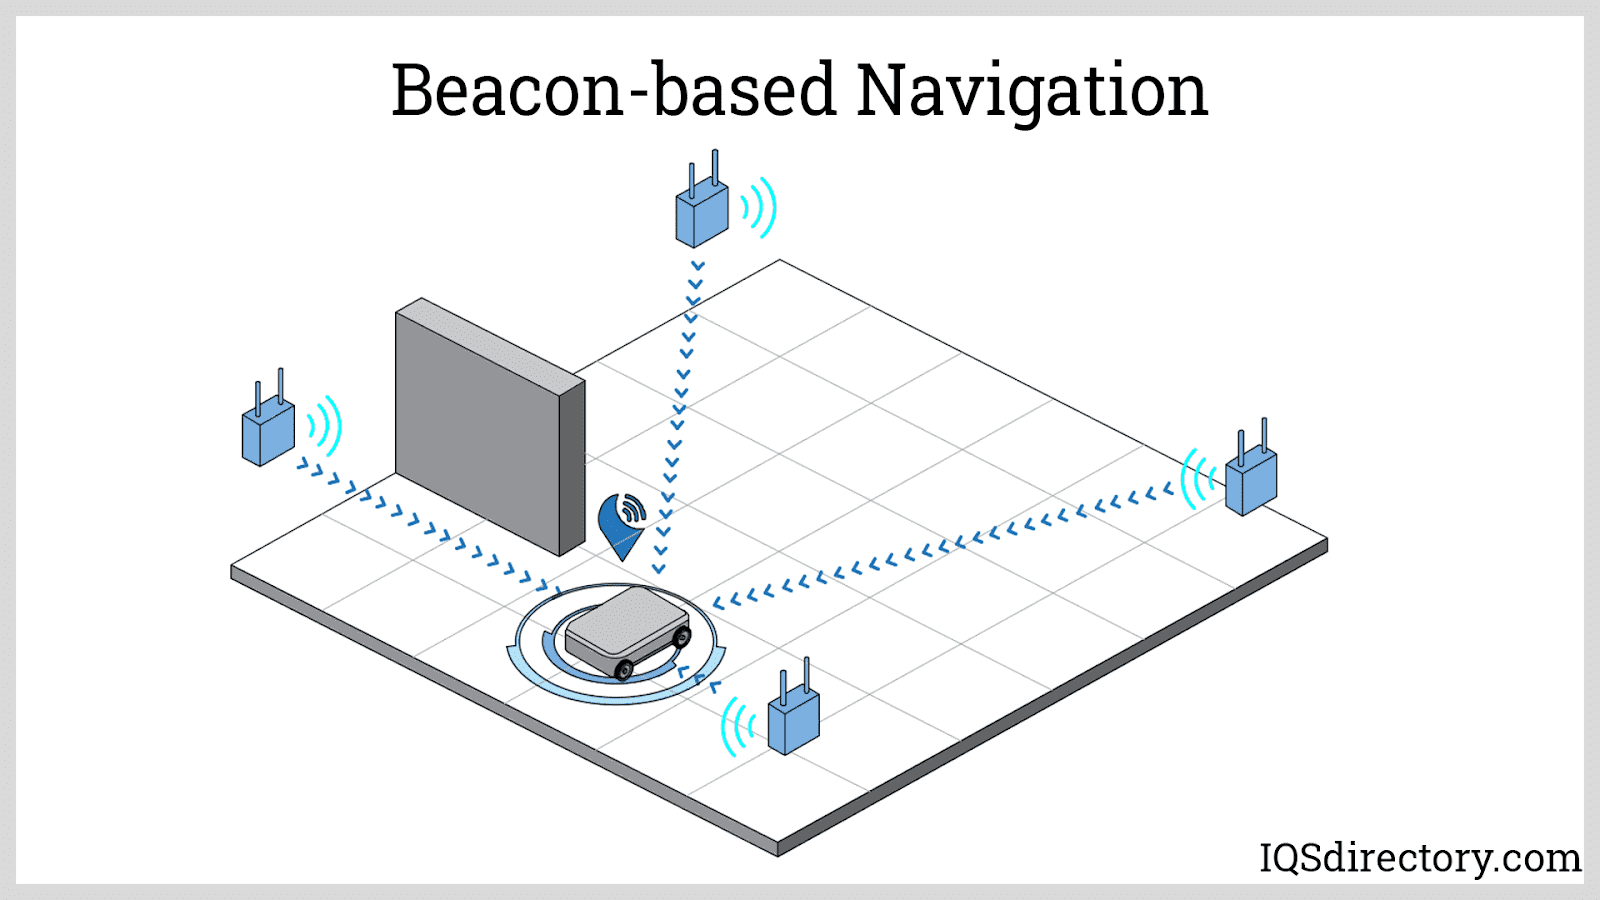 Beacon-based Navigation